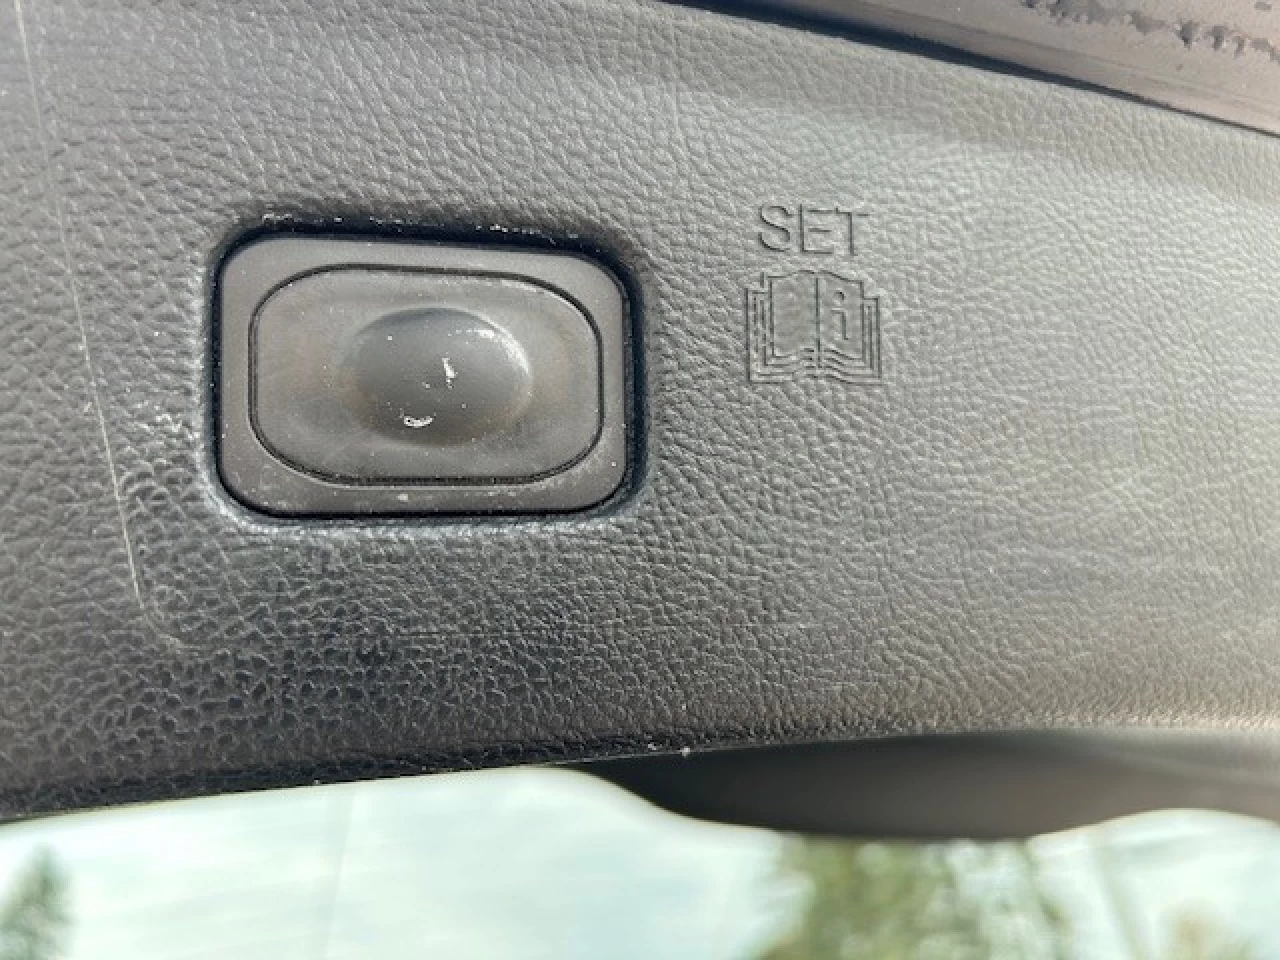 2019 Ford Edge SEL Main Image